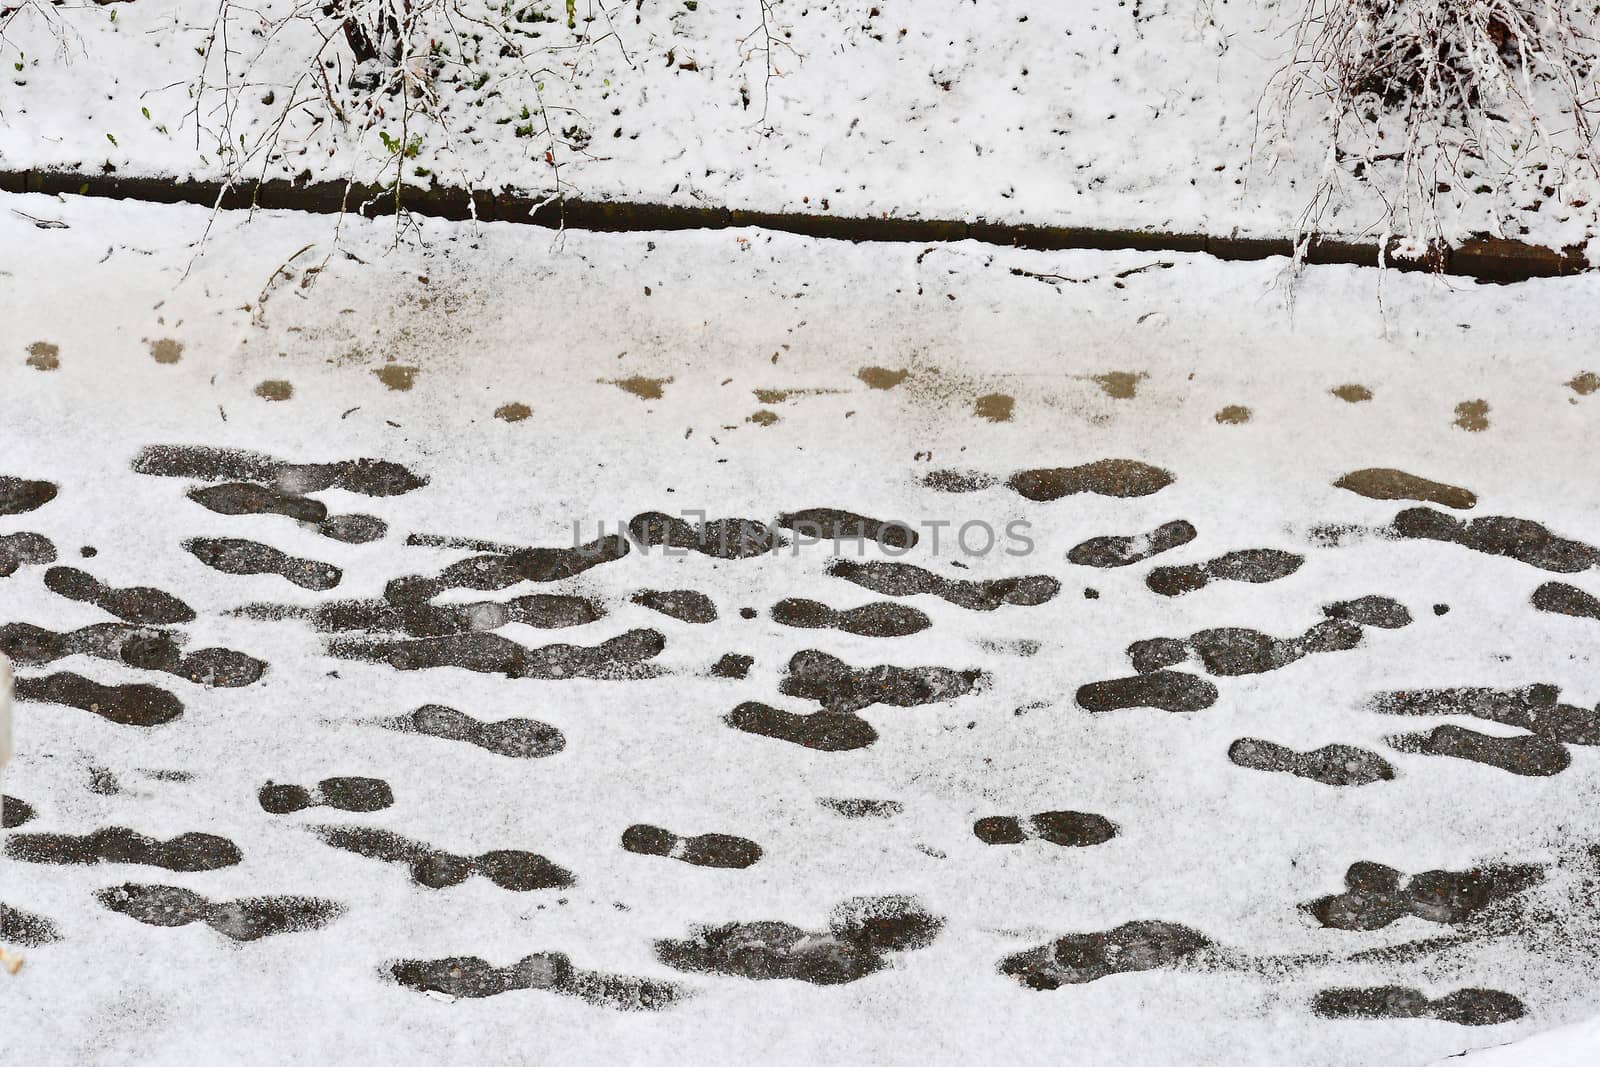 footprints at snowy sidewalk by anvodak